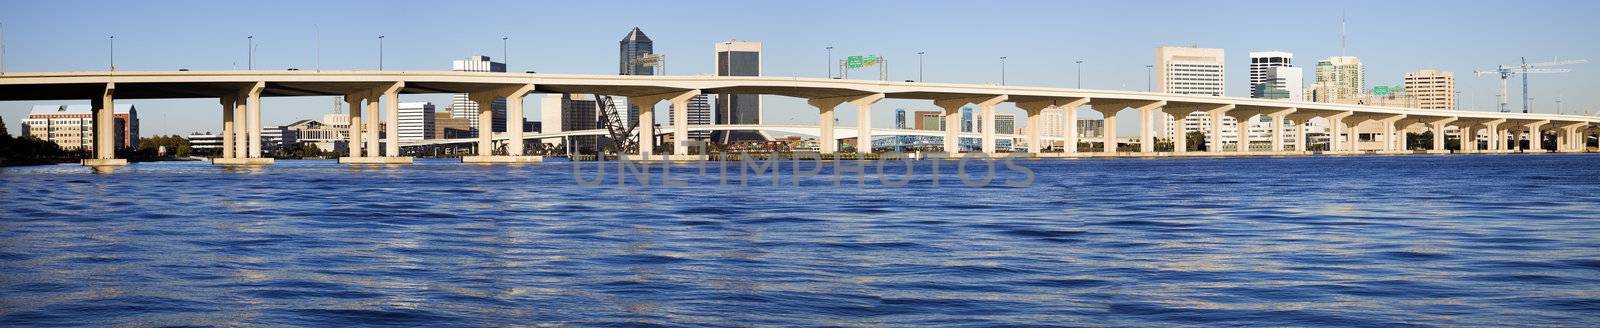 Panoramic Jacksonville by benkrut